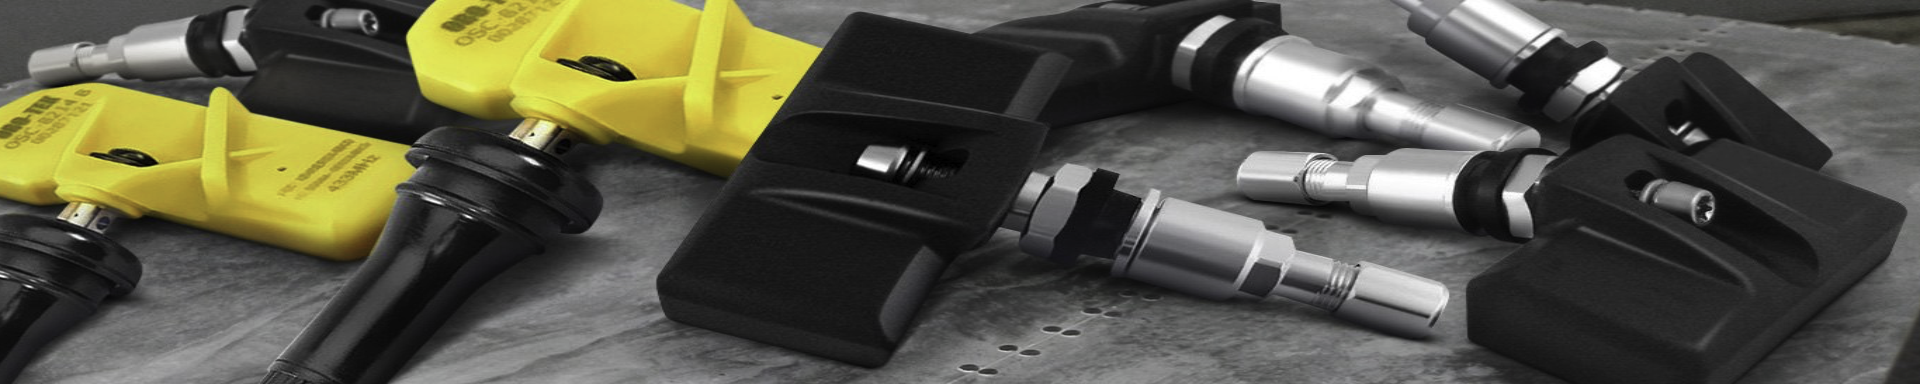 TPMS Sensors | GarageAndFab.com | Munro Industries gf-100103080904